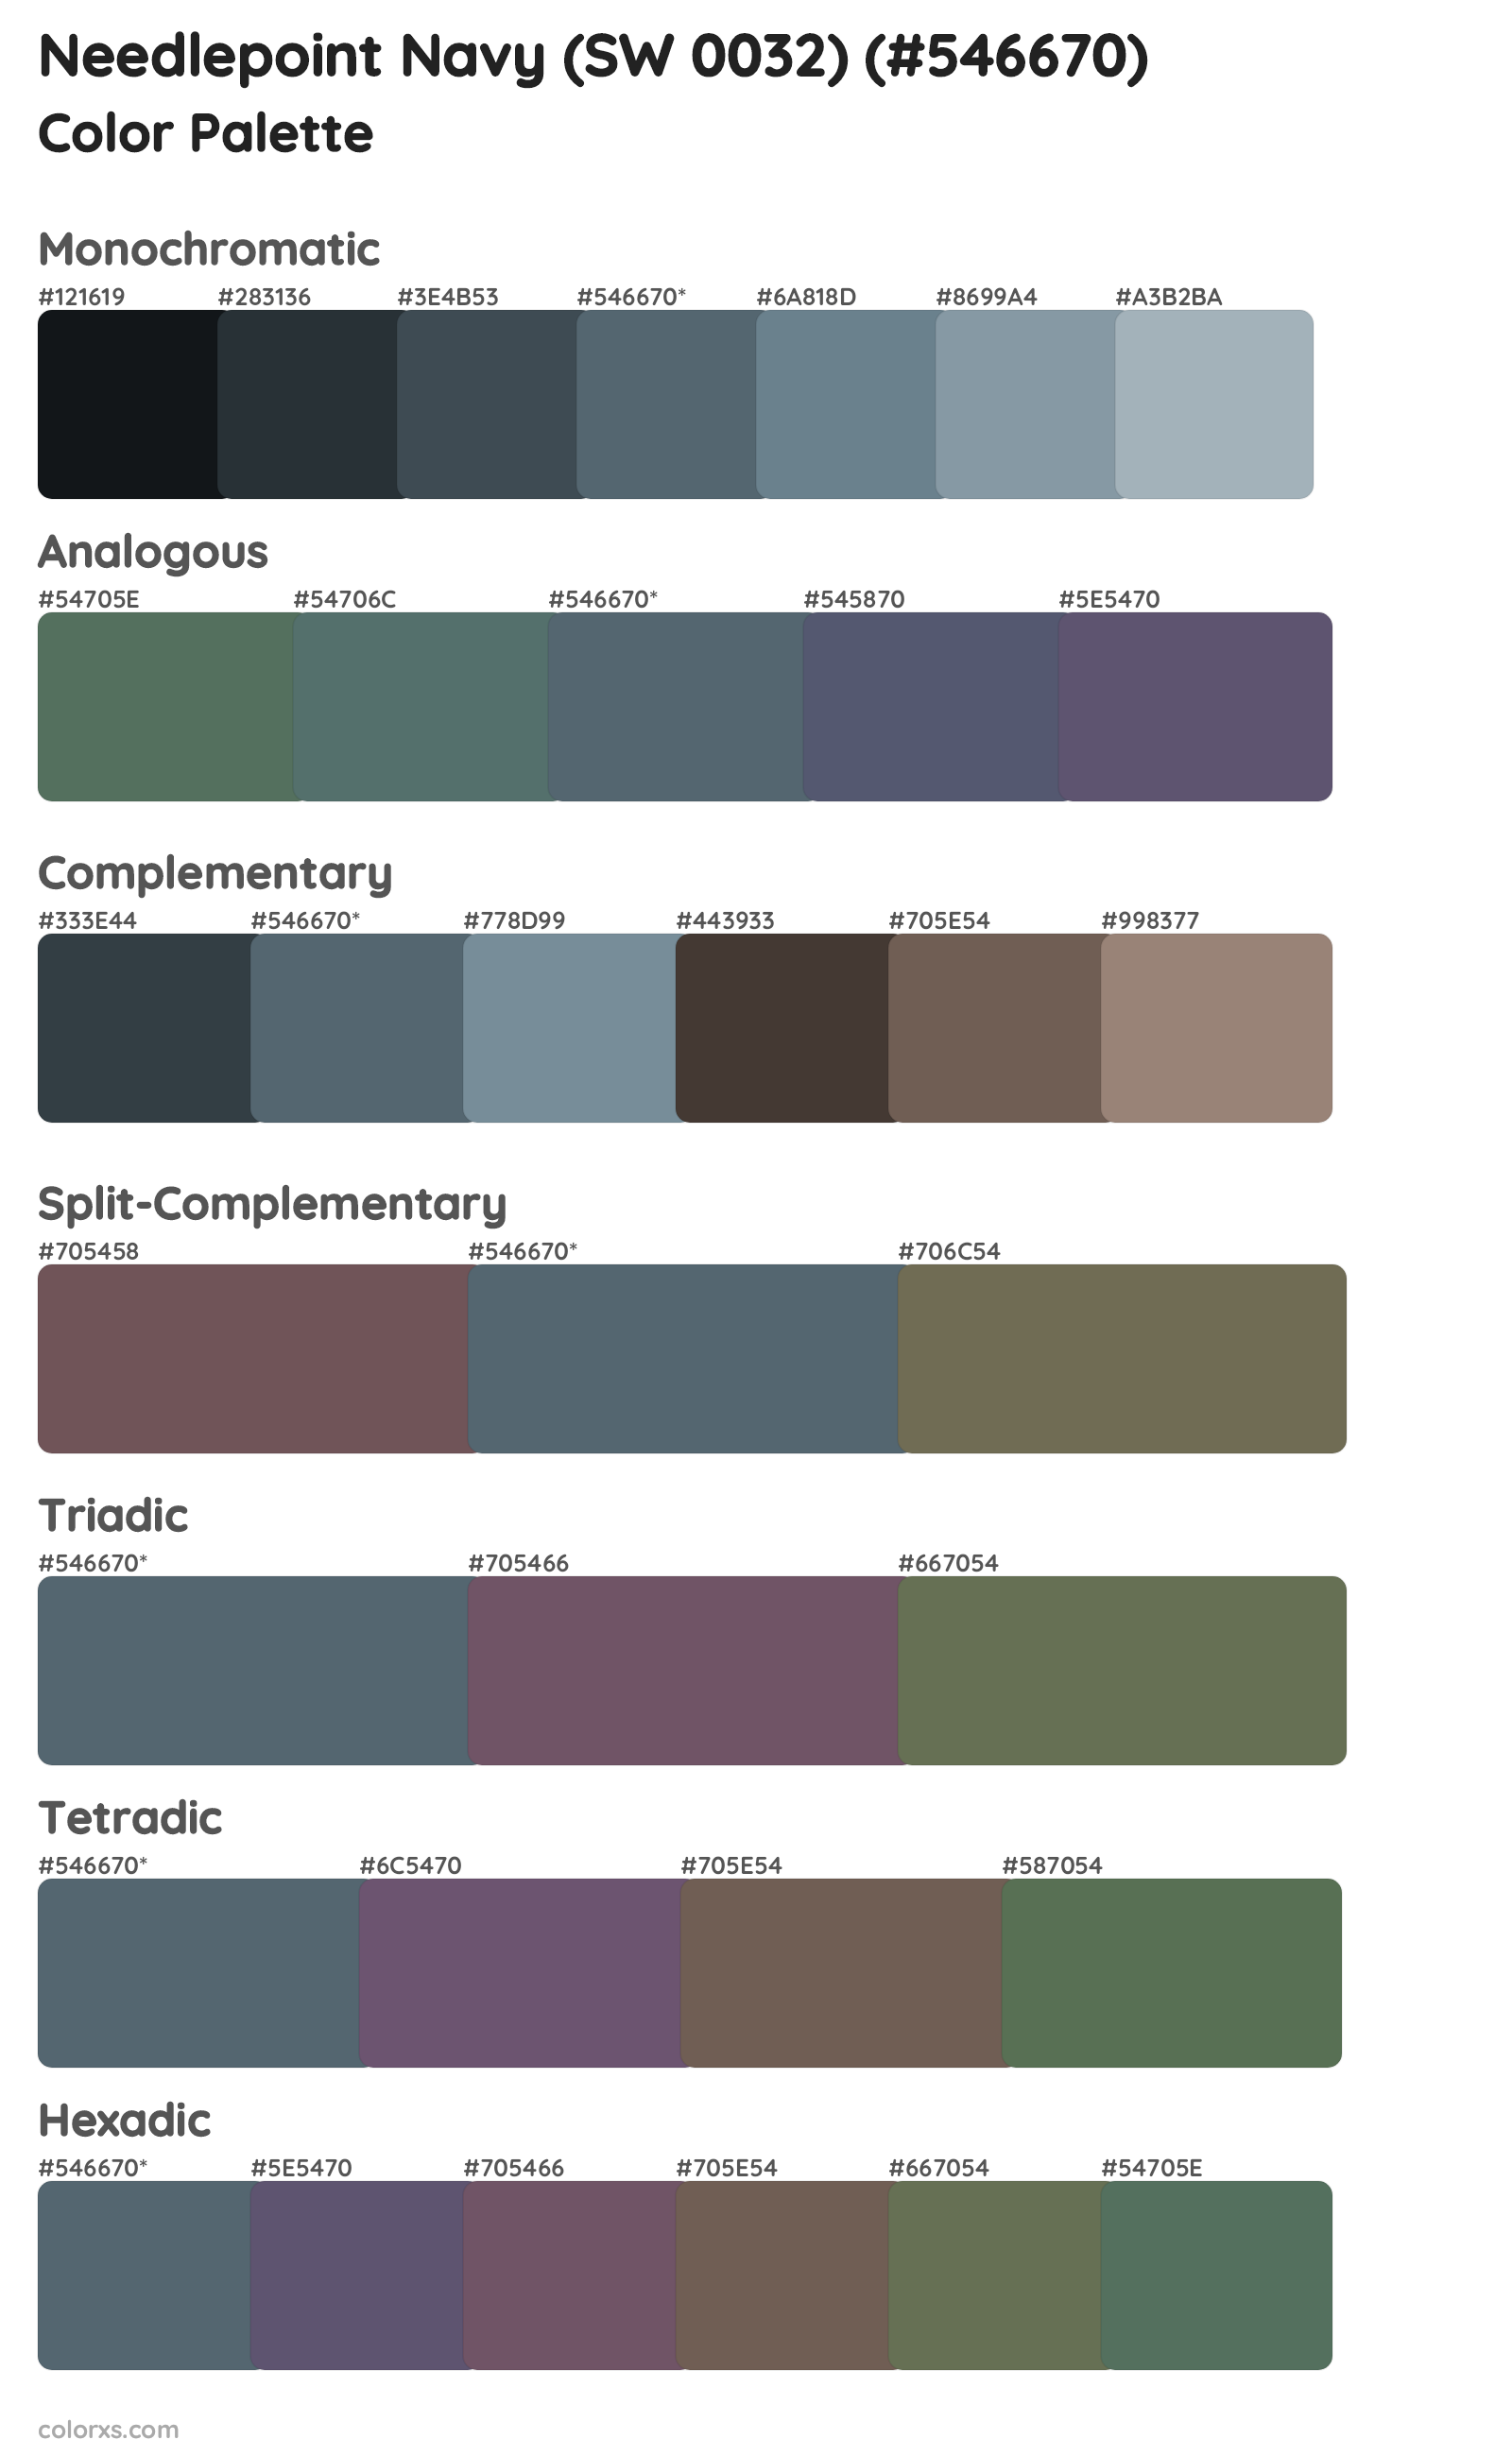 Needlepoint Navy (SW 0032) Color Scheme Palettes